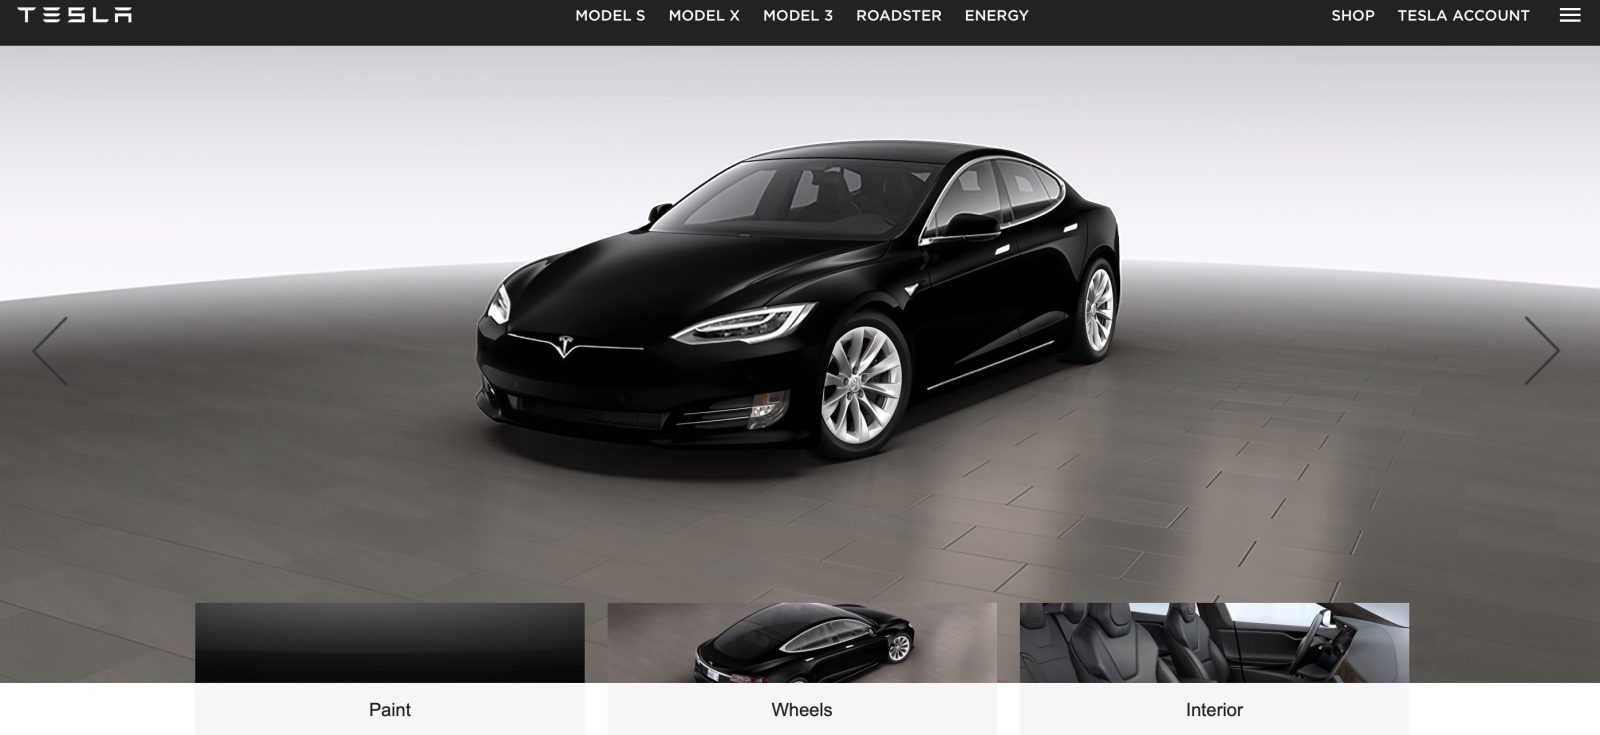 Tesla 'off-the-menu items'